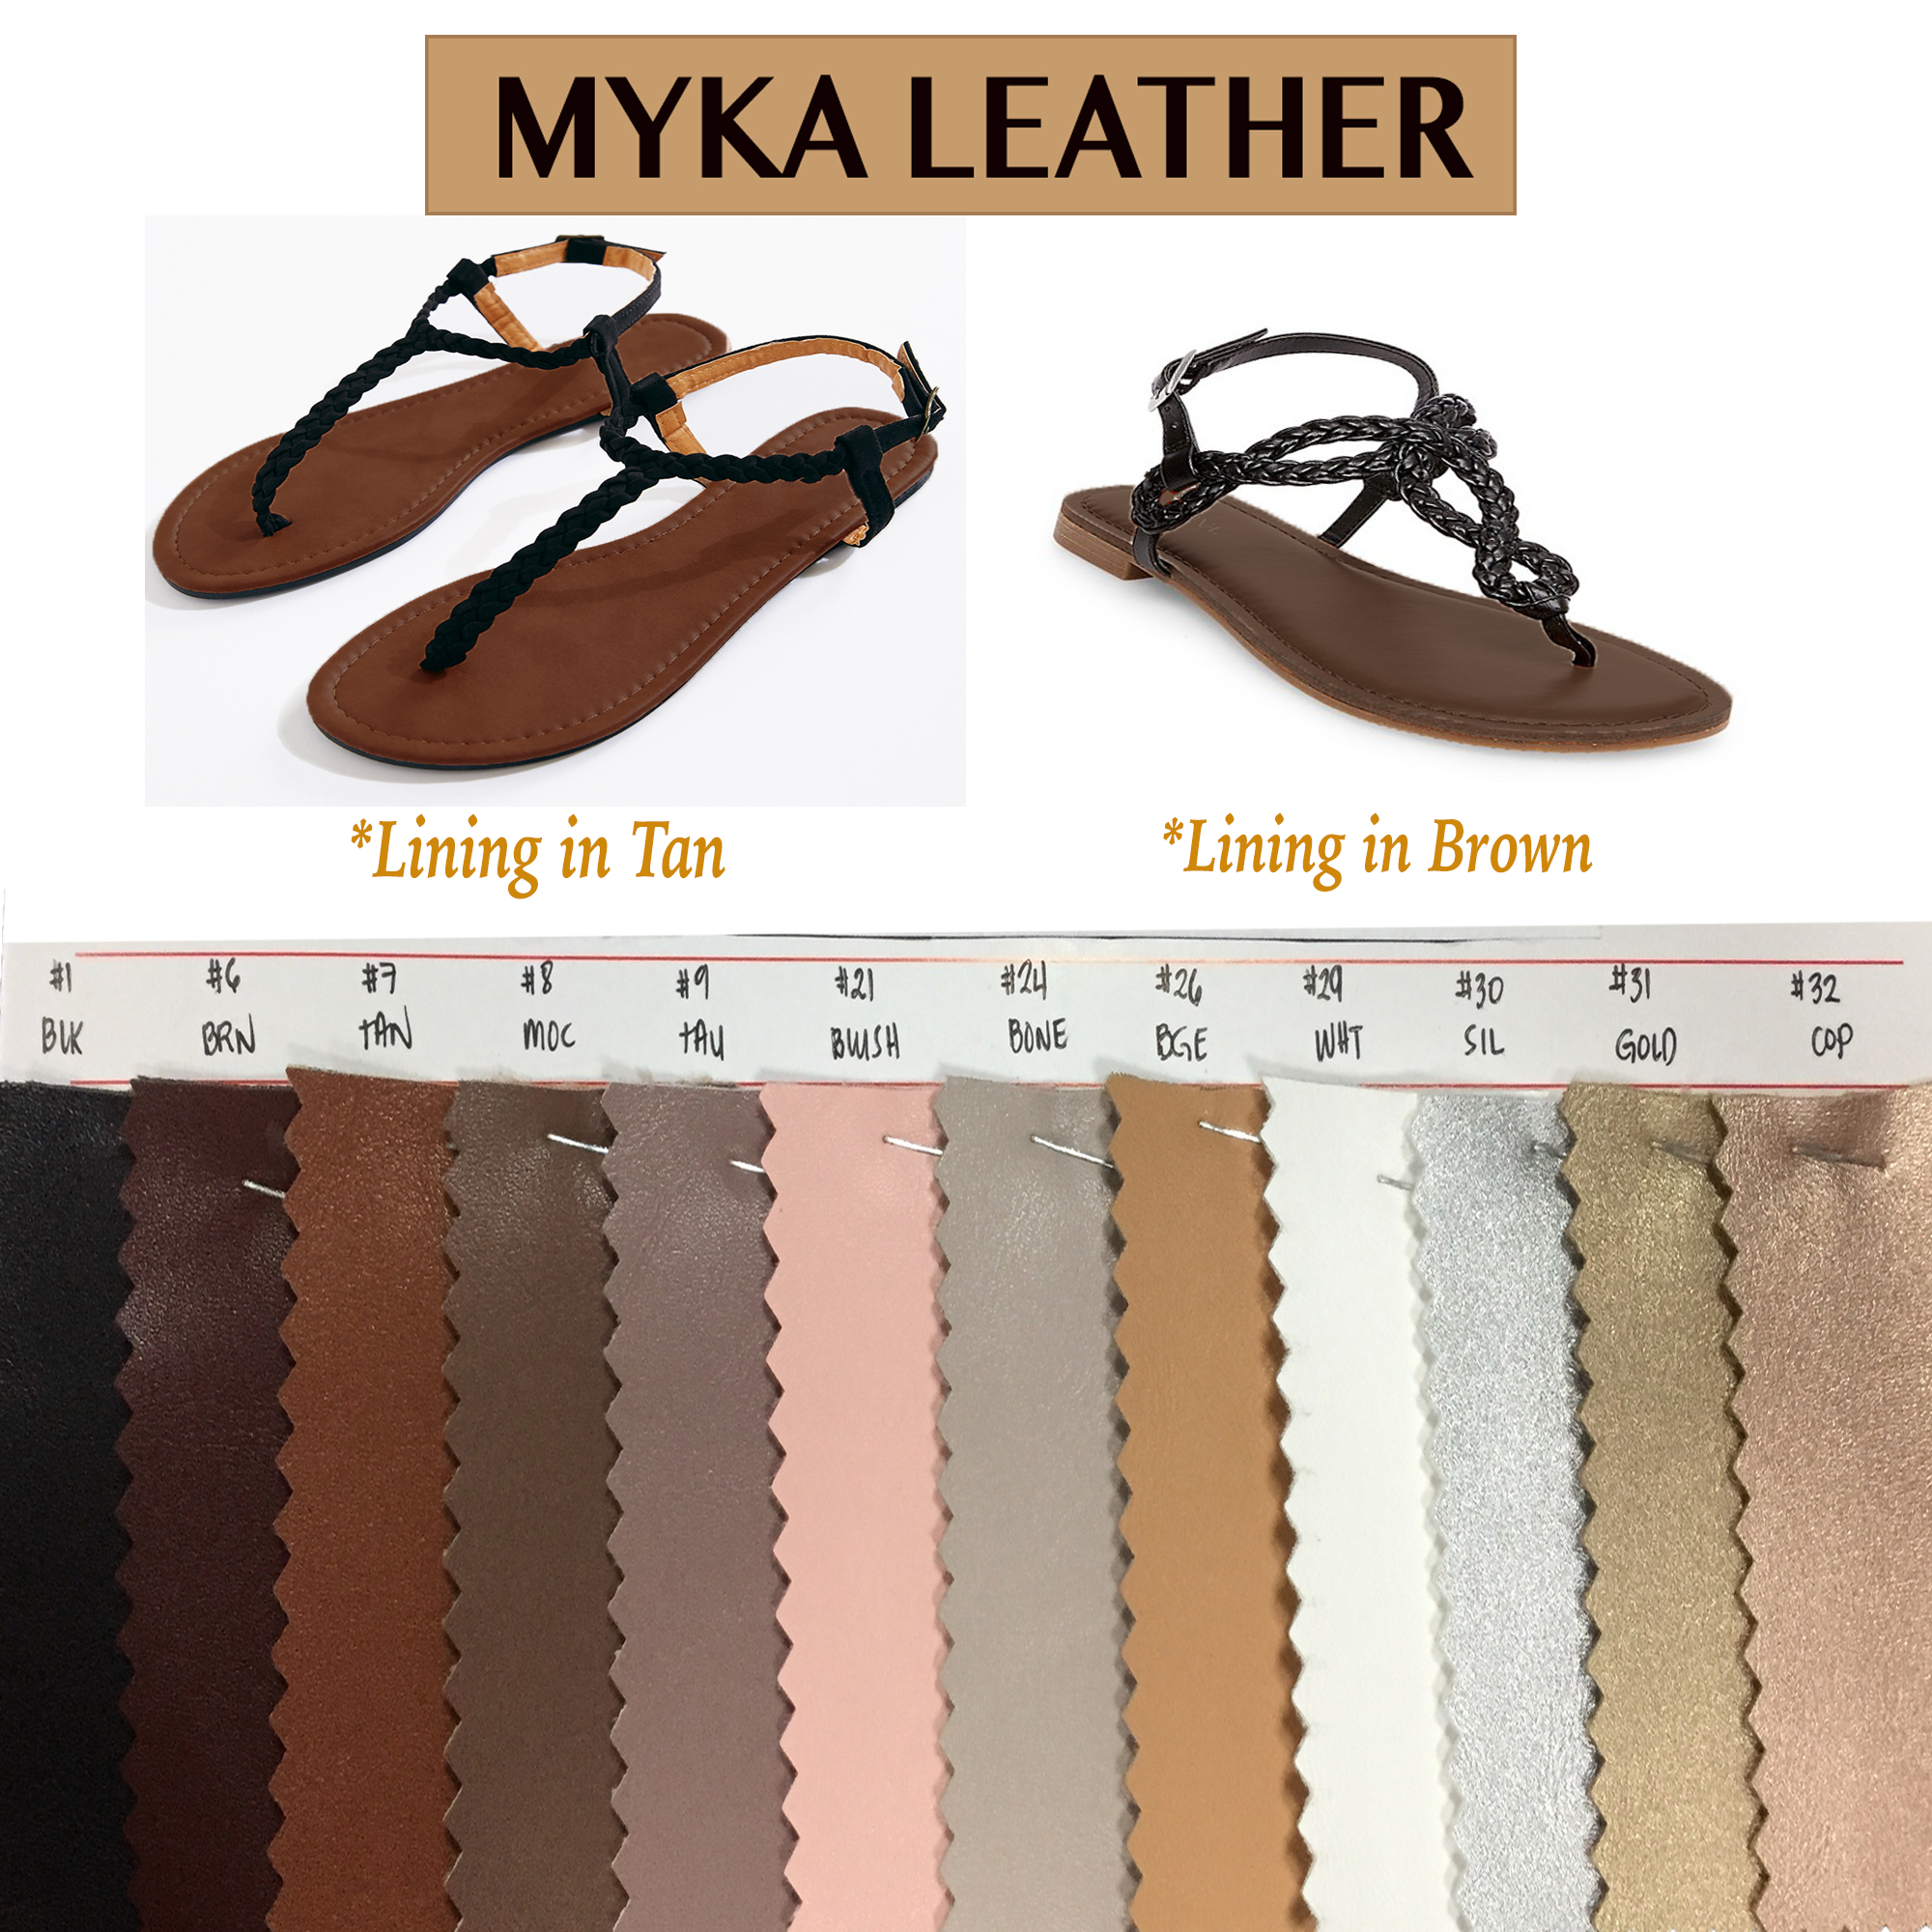 Myka Leather